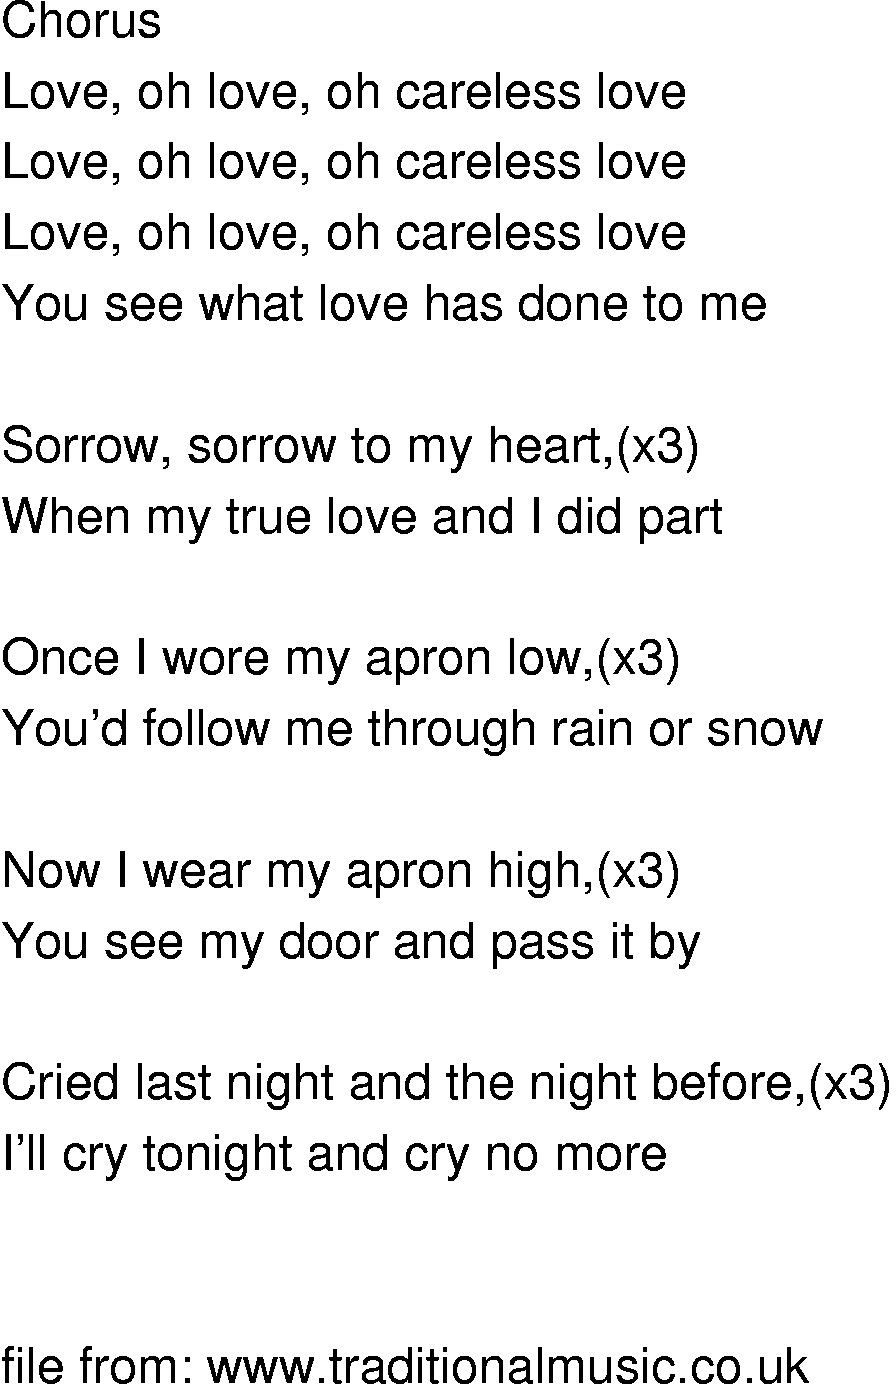 Old-Time (oldtimey) Song Lyrics - careless love